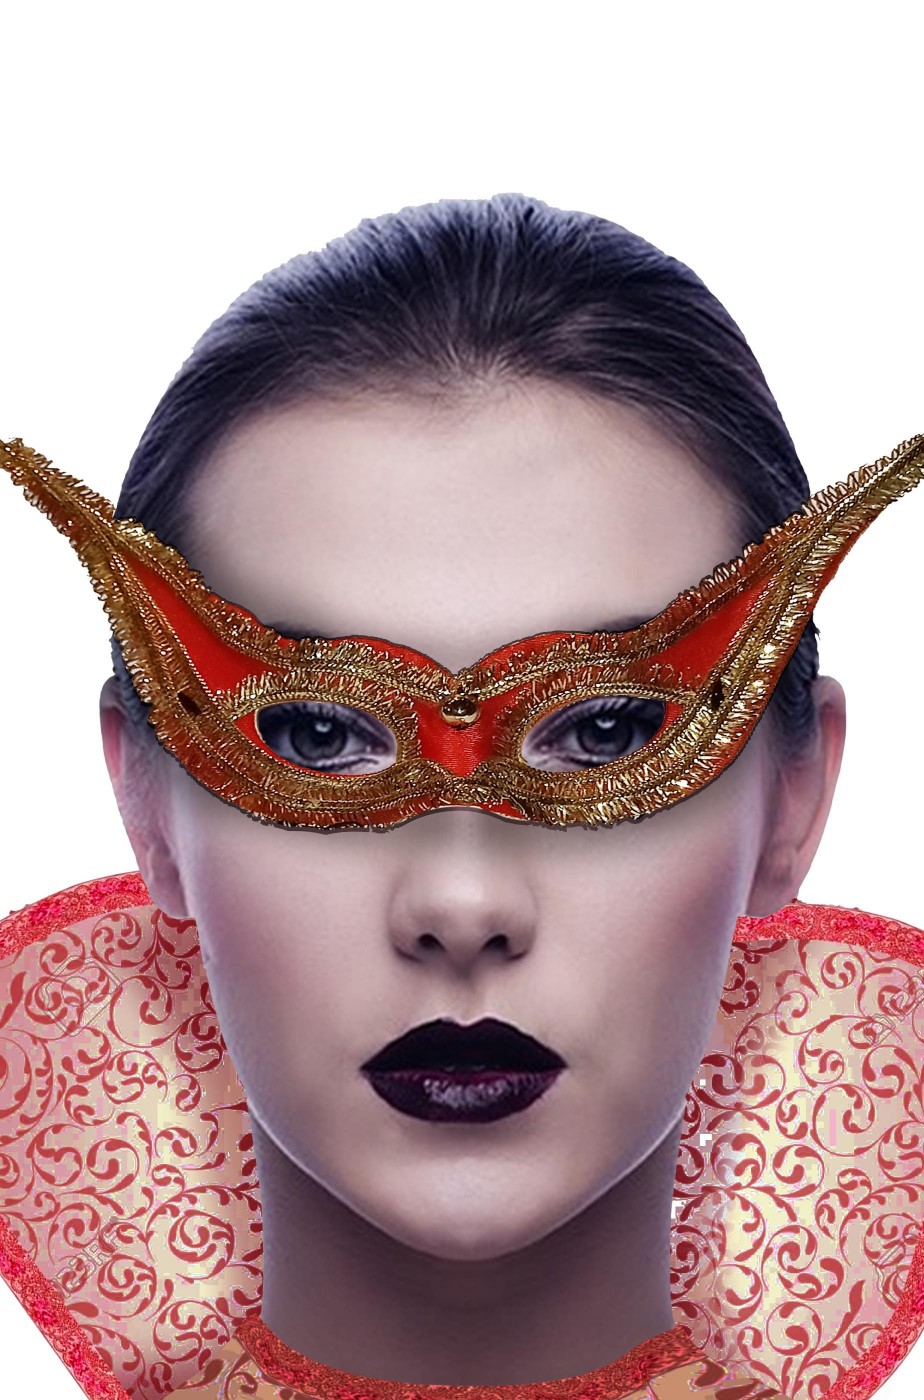 https://carnivalhalloween.com/21677-large_default/maschera-carnevale-veneziano-donna-rossa-oro-occhi-gatto.jpg